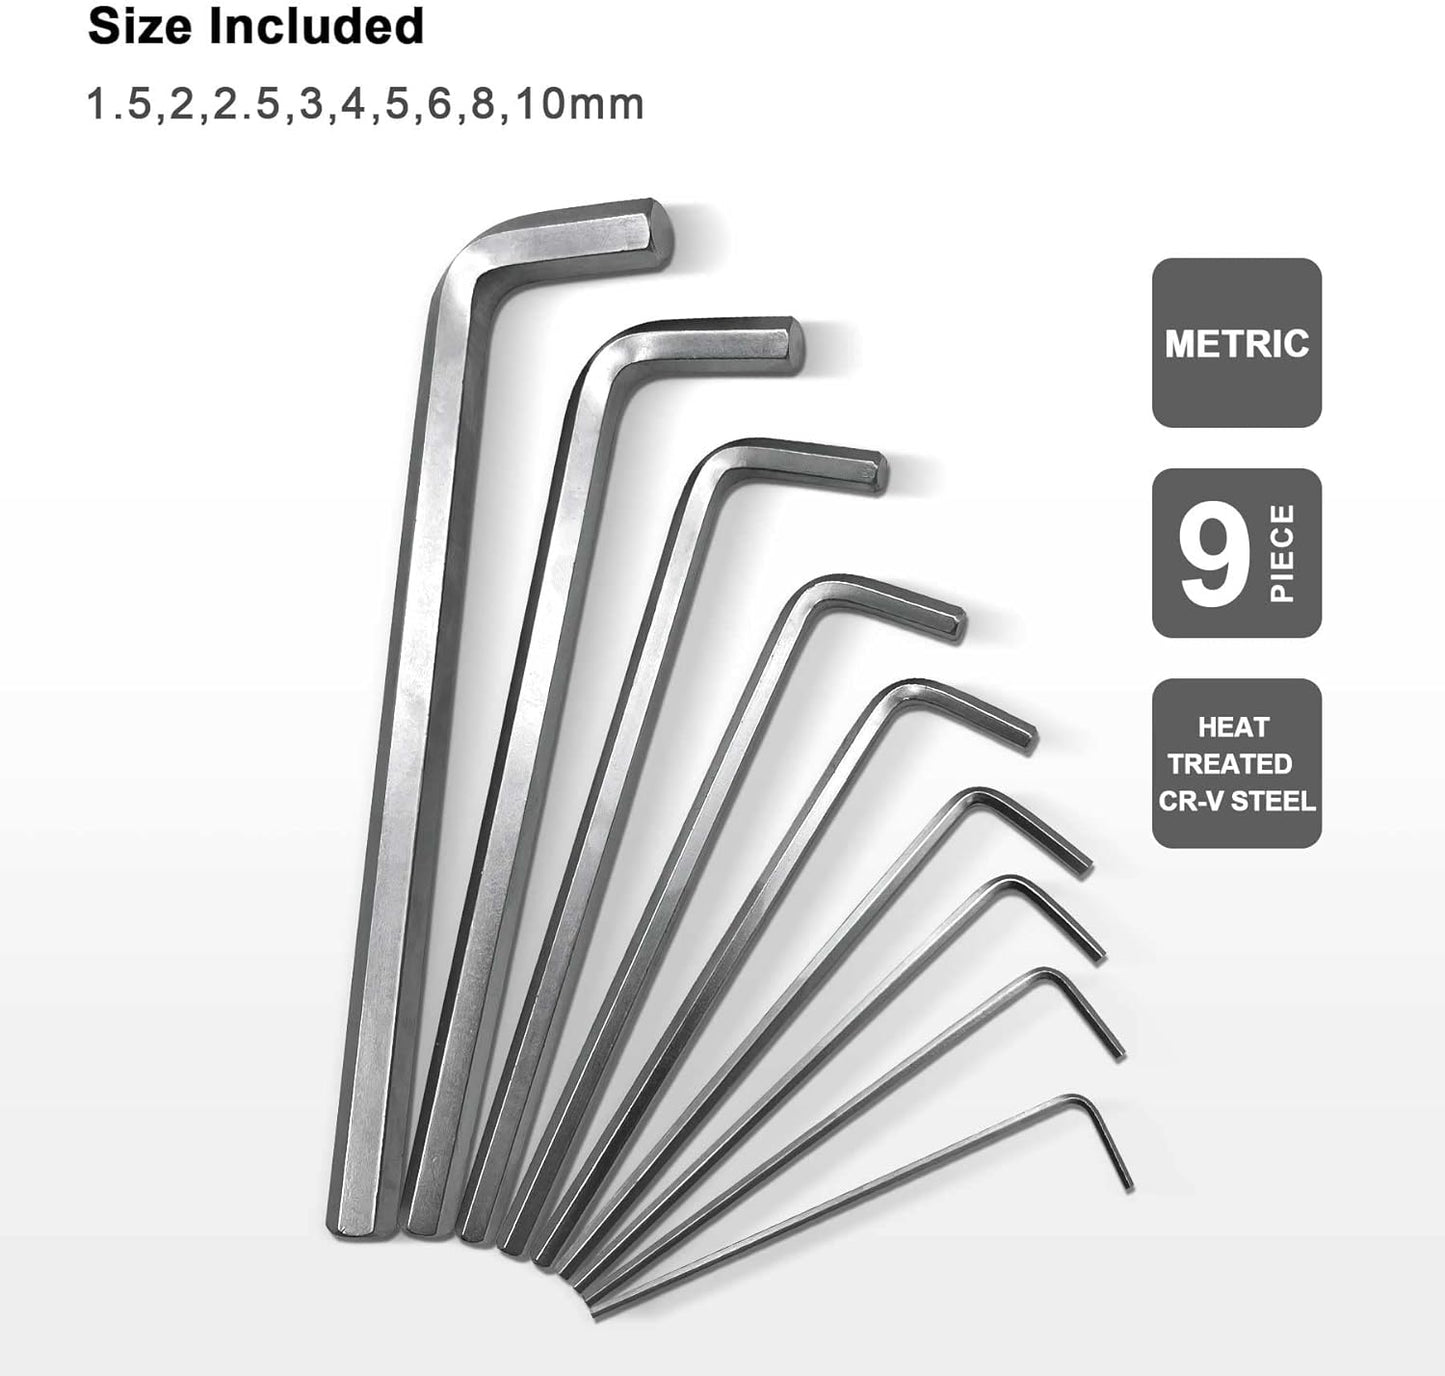 HAUTMEC 9-Piece Hex Key Allen Wrench Set, L Shape Metric Assortment, Chrome Vanadium Steel, Precise and Chamfered Tips, 1.5-10 mm, HT0221-SS